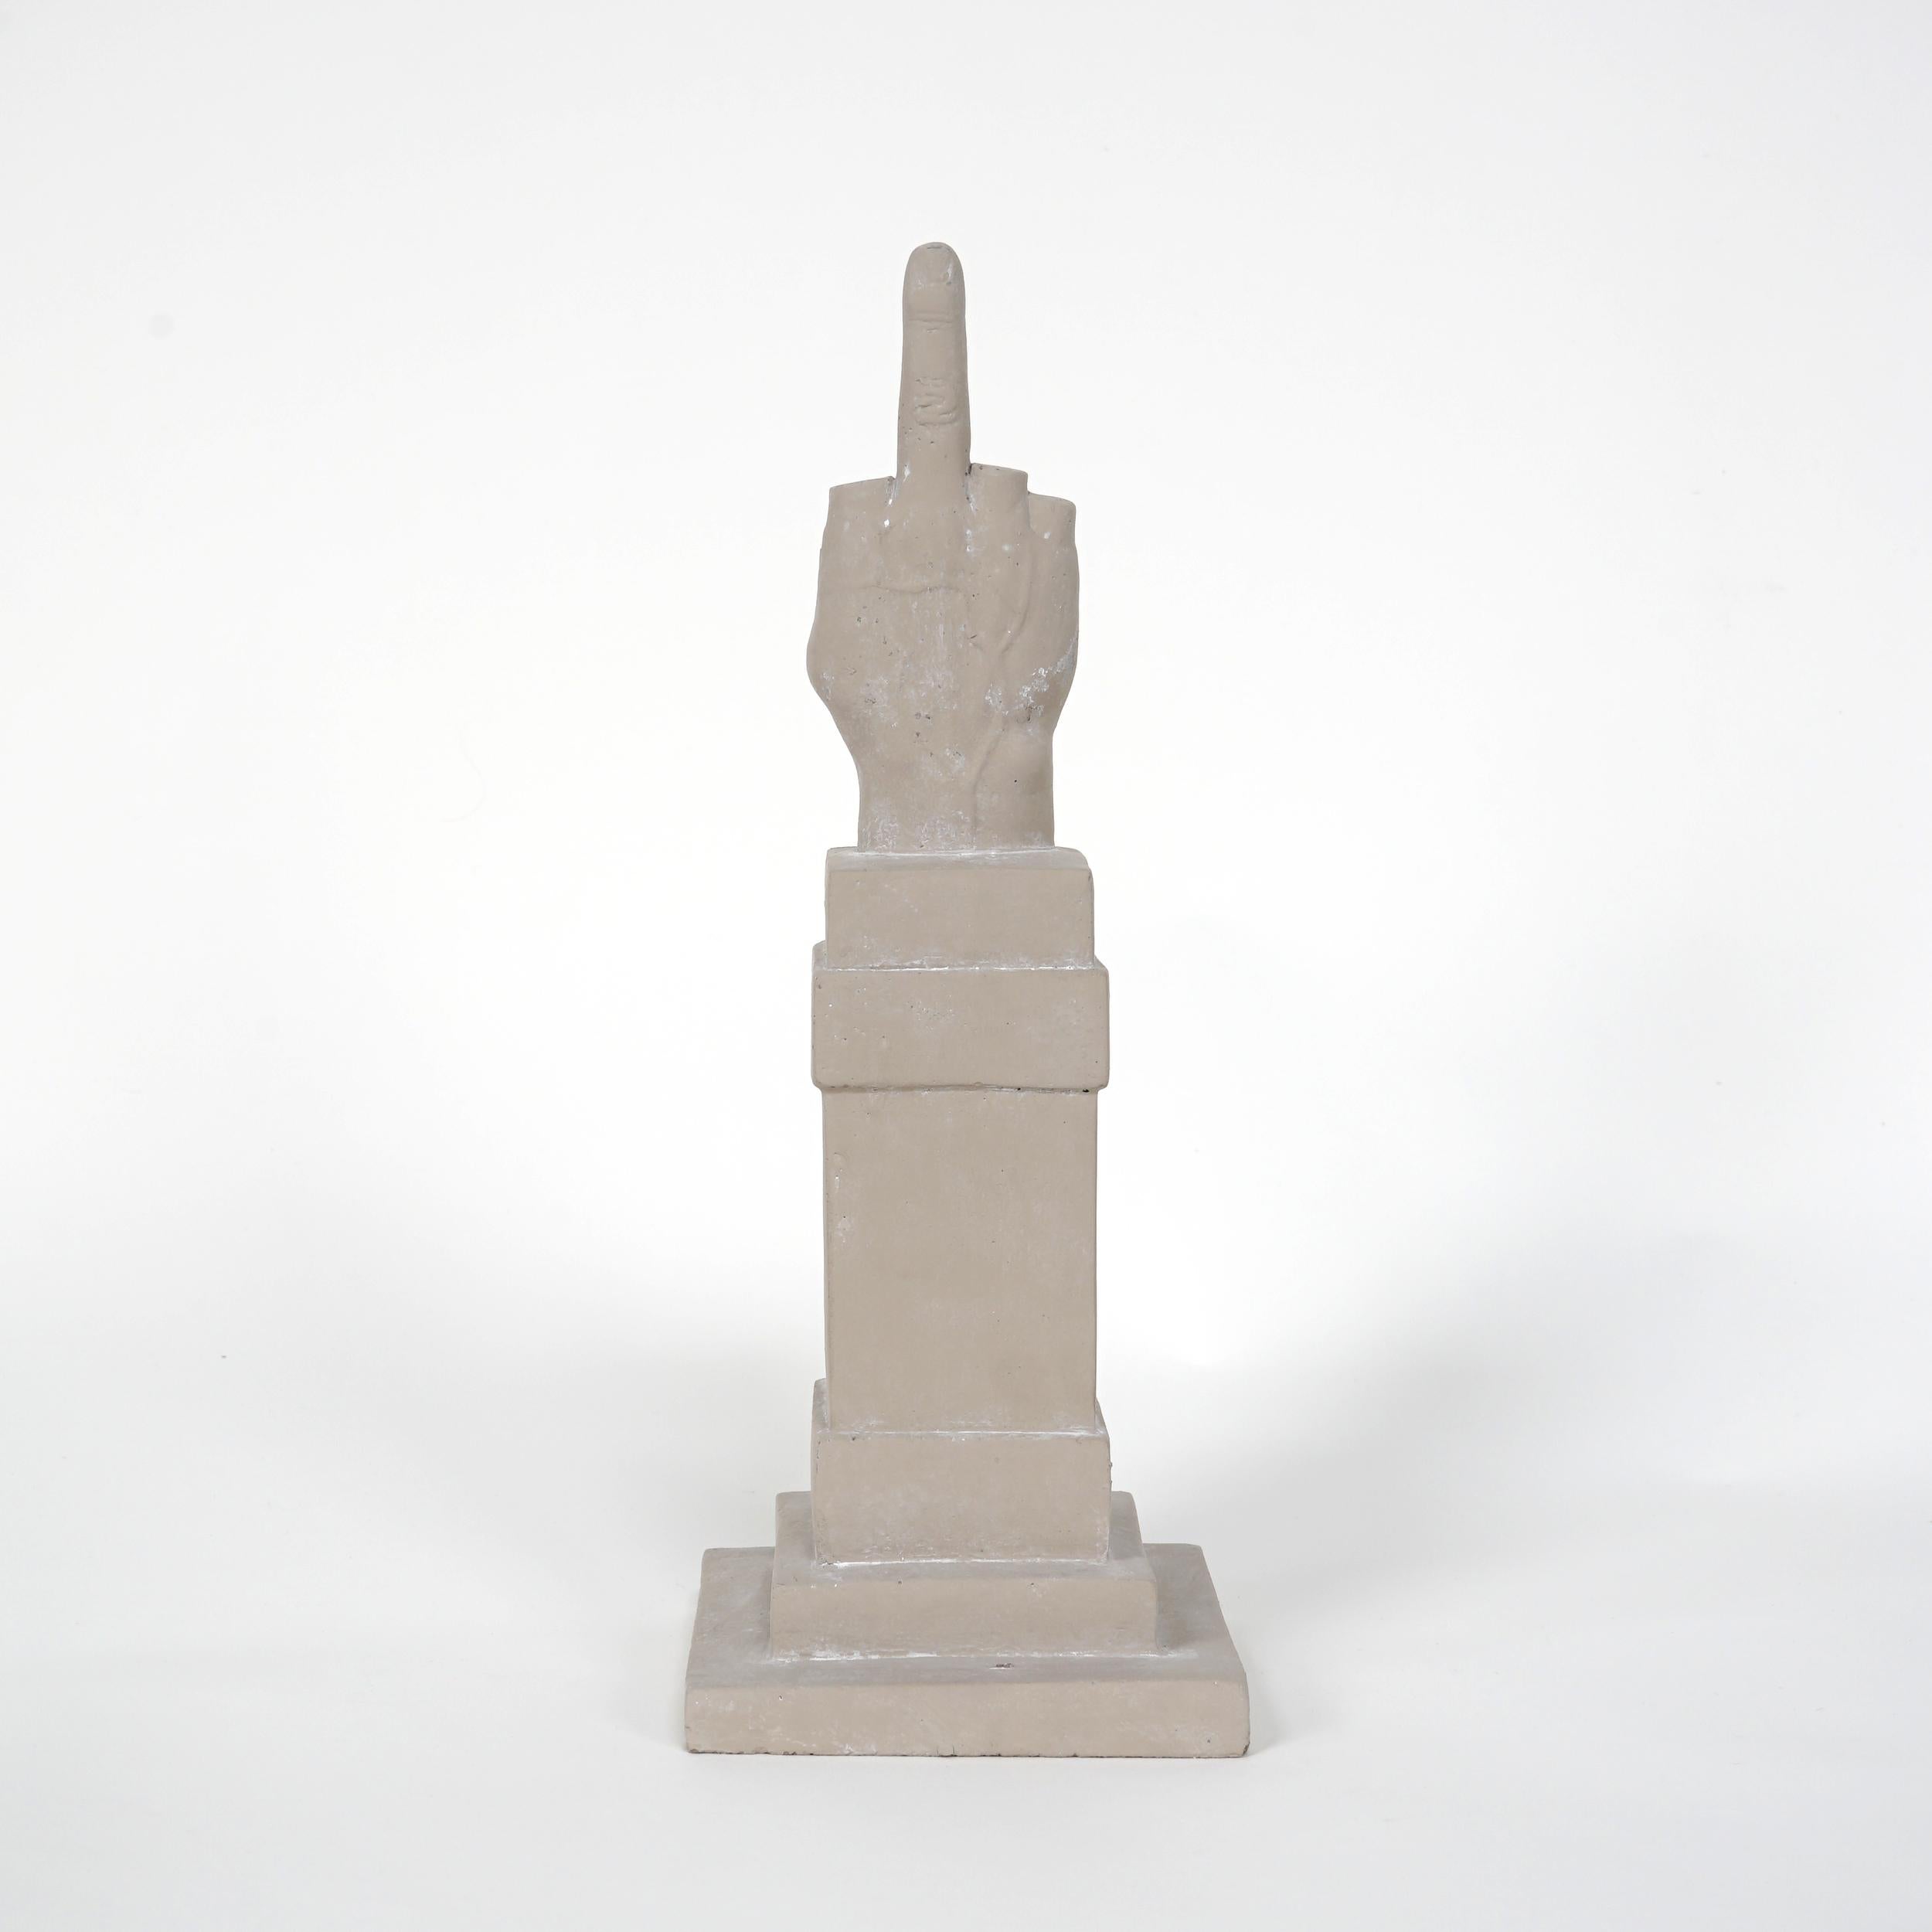 Maurizio Cattelan Figurative Sculpture - L.O.V.E. Sculpture by Cattelan, reproduction of the statue in Piazza Affari